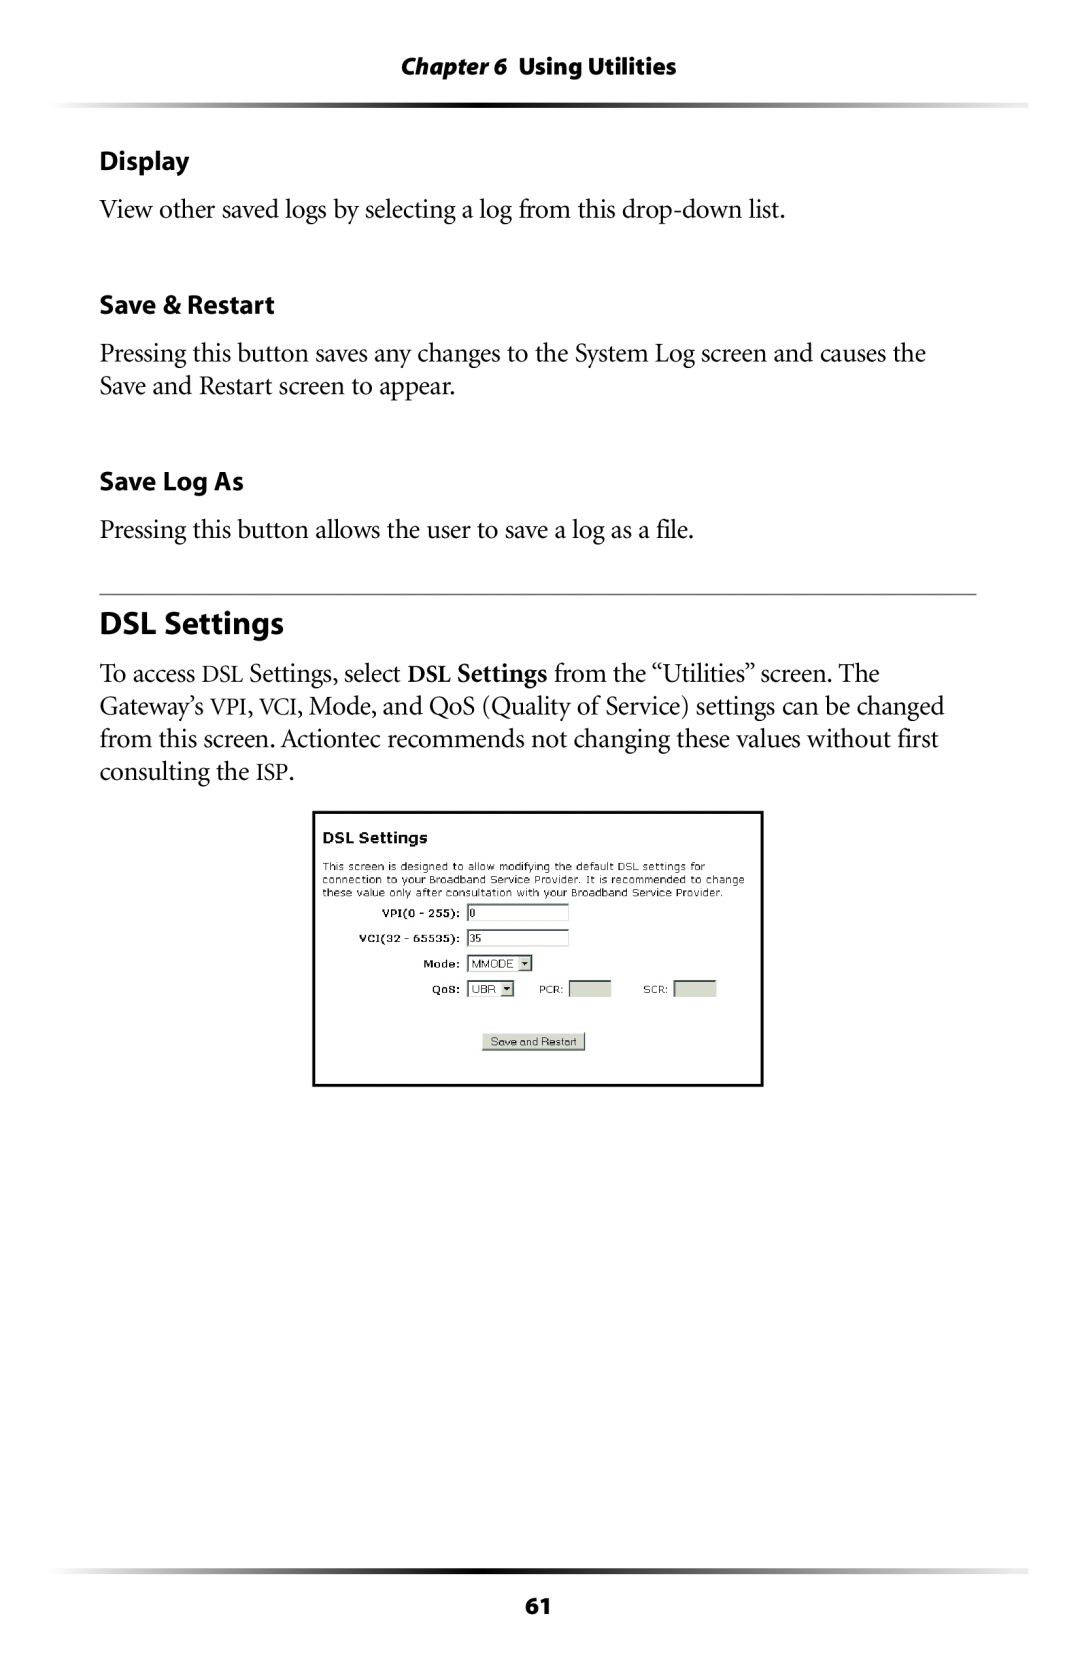 Gateway GT704 user manual DSL Settings 